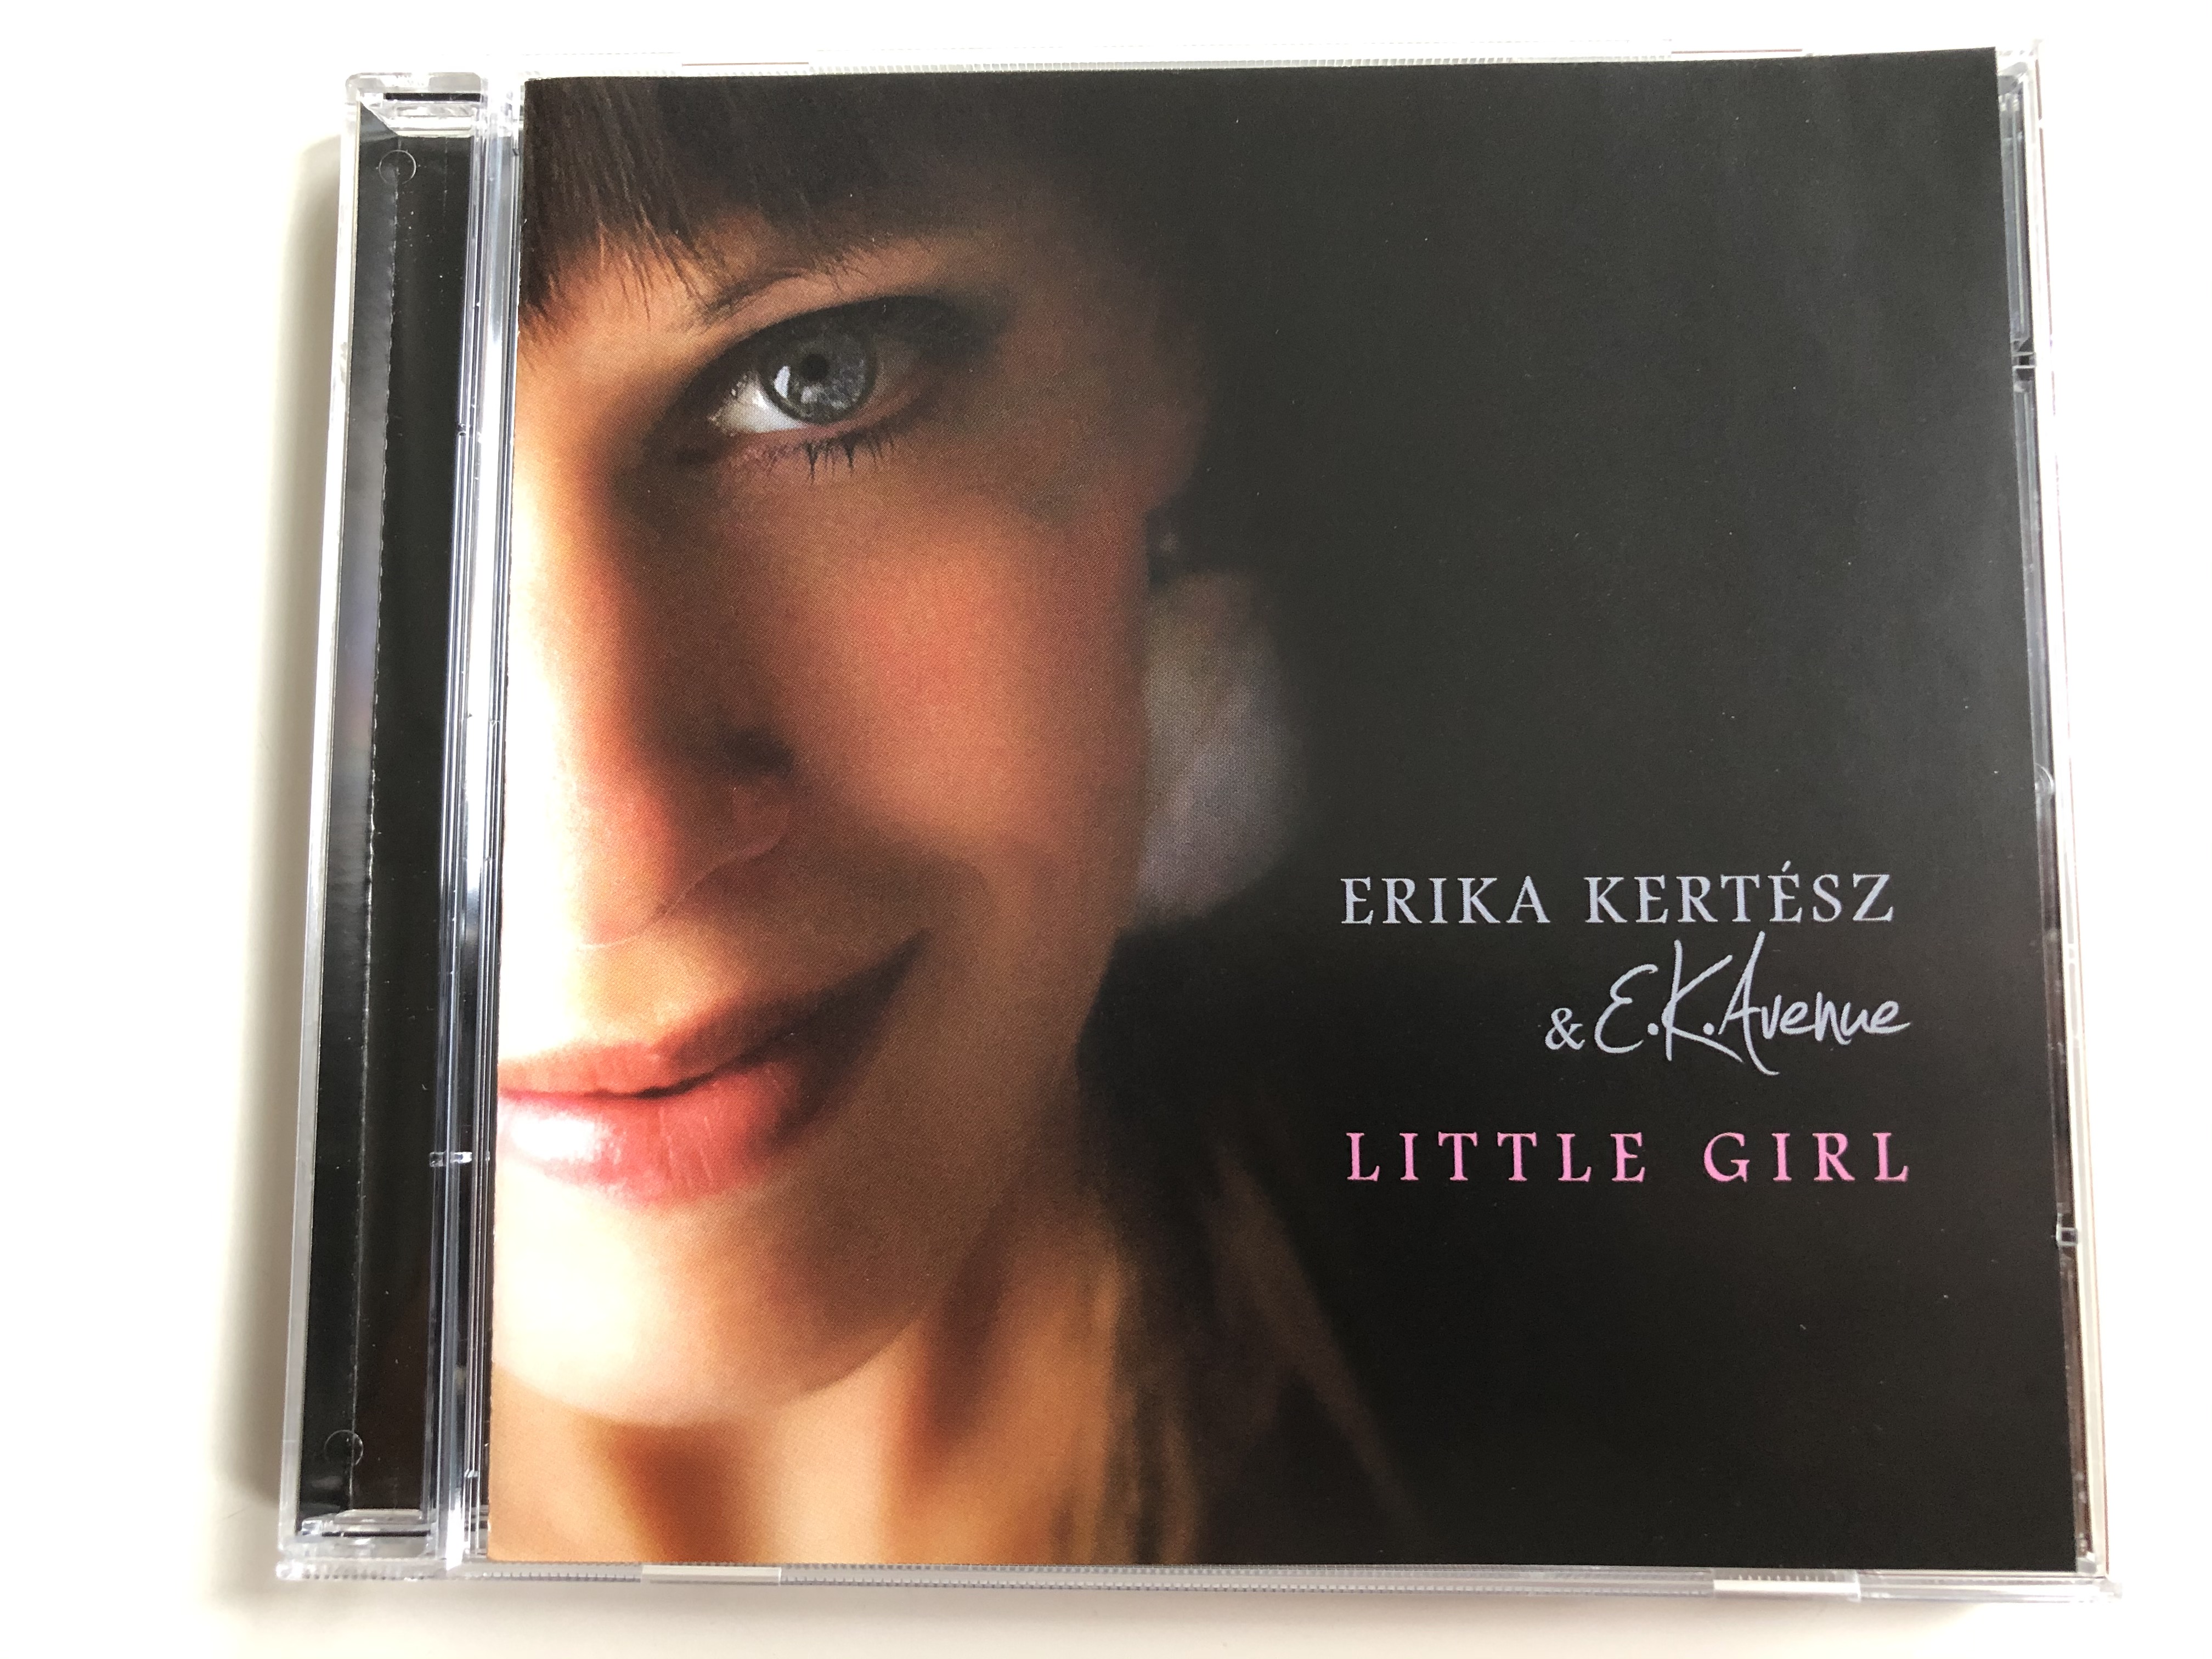 erika-kert-sz-e.k.-avenue-little-girl-magneoton-audio-cd-2010-5999884690016-1-.jpg